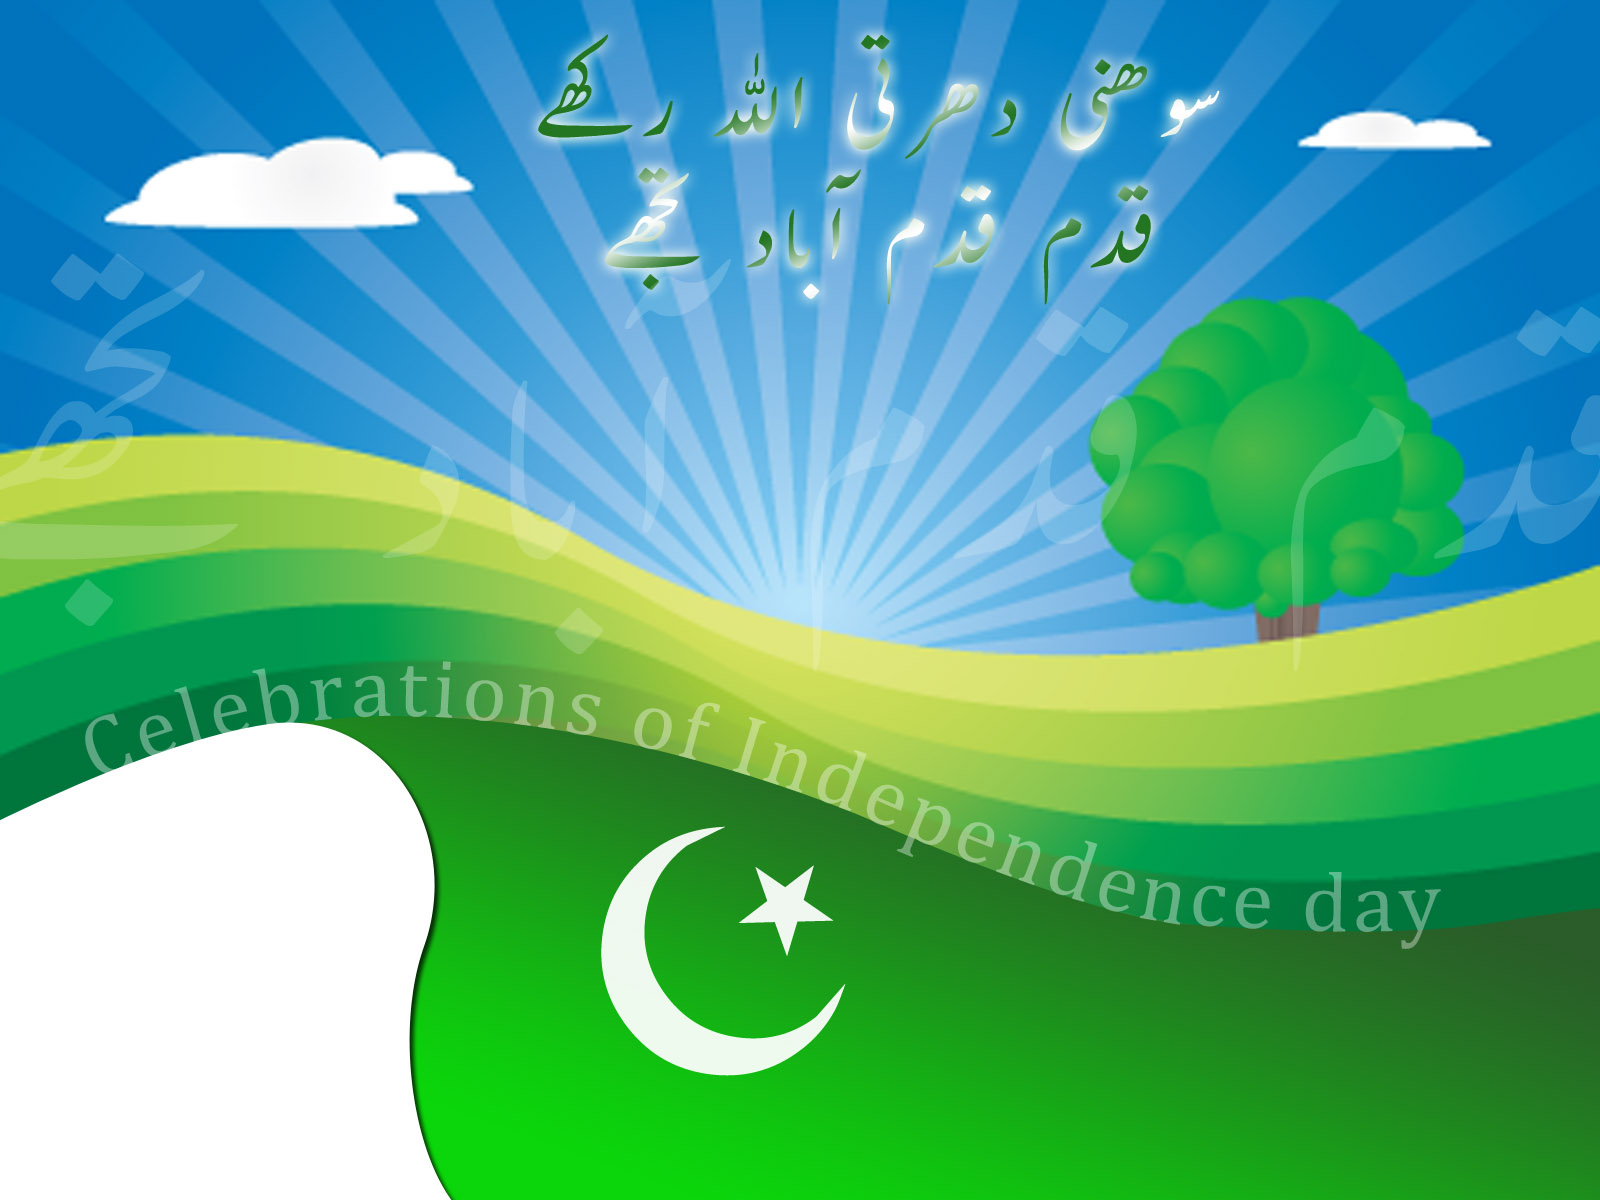 http://1.bp.blogspot.com/-fTTHClEuyUw/TkbTpwVwQKI/AAAAAAAAPbA/qpDjHGTB2J8/s1600/14+August+Pakistan+Indefendence+Day+card+greeting+psupero+%25283%2529.jpg